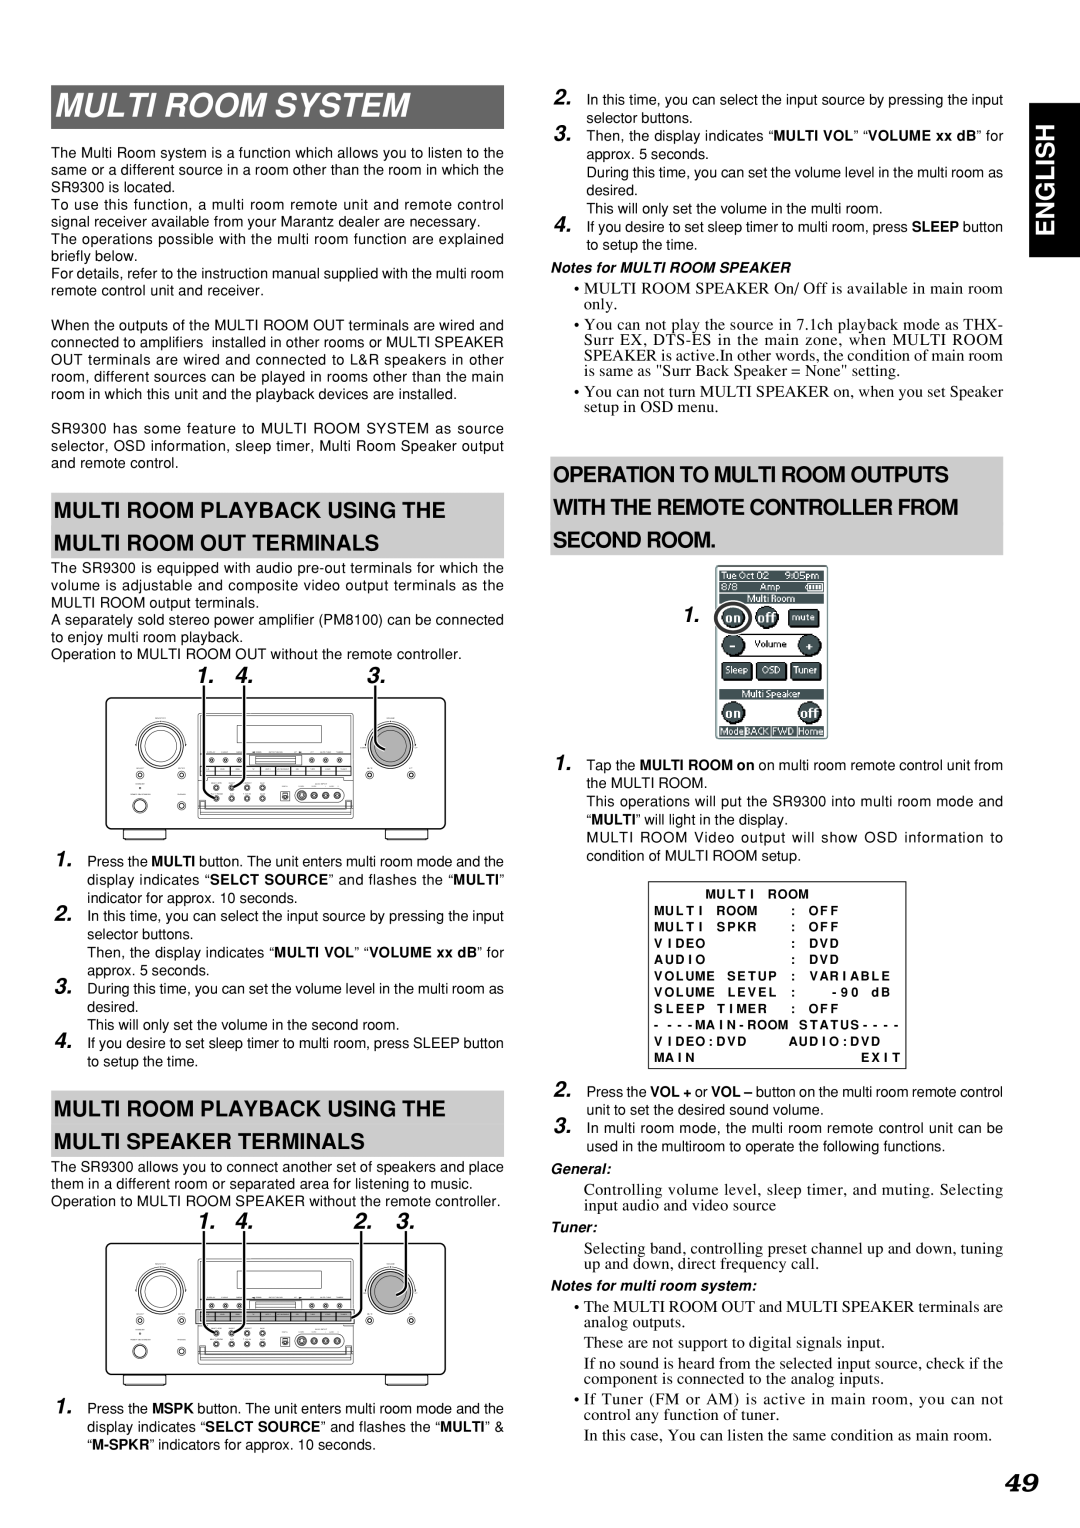 Marantz SR9300 manual Multi Room System, English, Notes for MULTI ROOM SPEAKER, General, Tuner, Notes for multi room system 